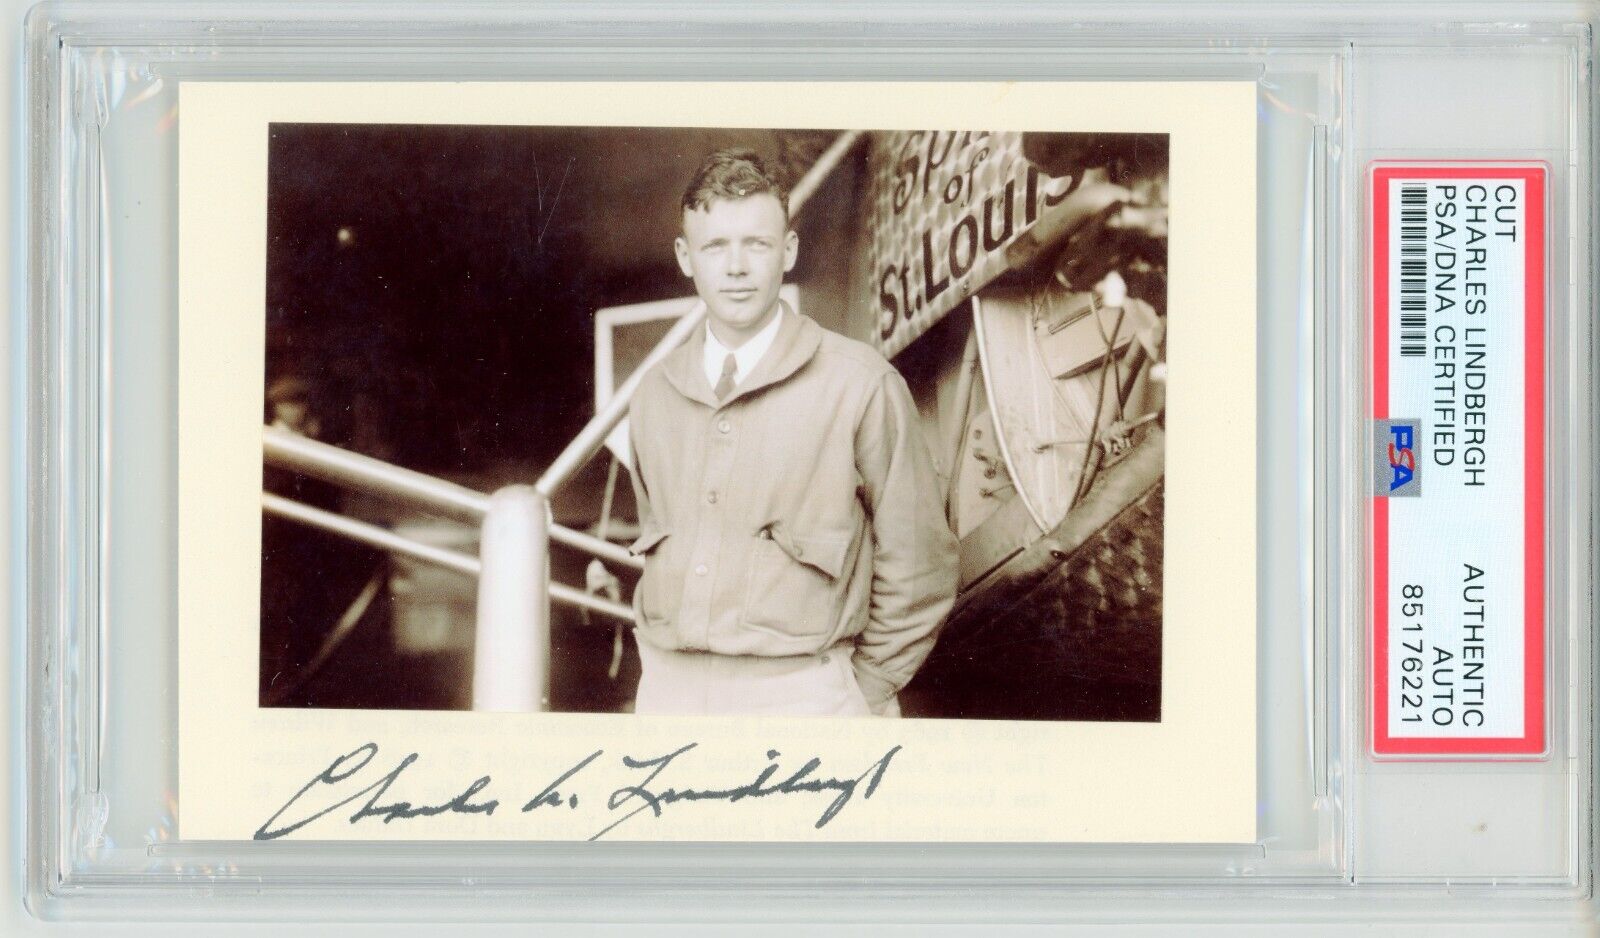 Charles Lindbergh ~ Signed Autographed Spirit of St. Louis Monoplane ~ PSA DNA